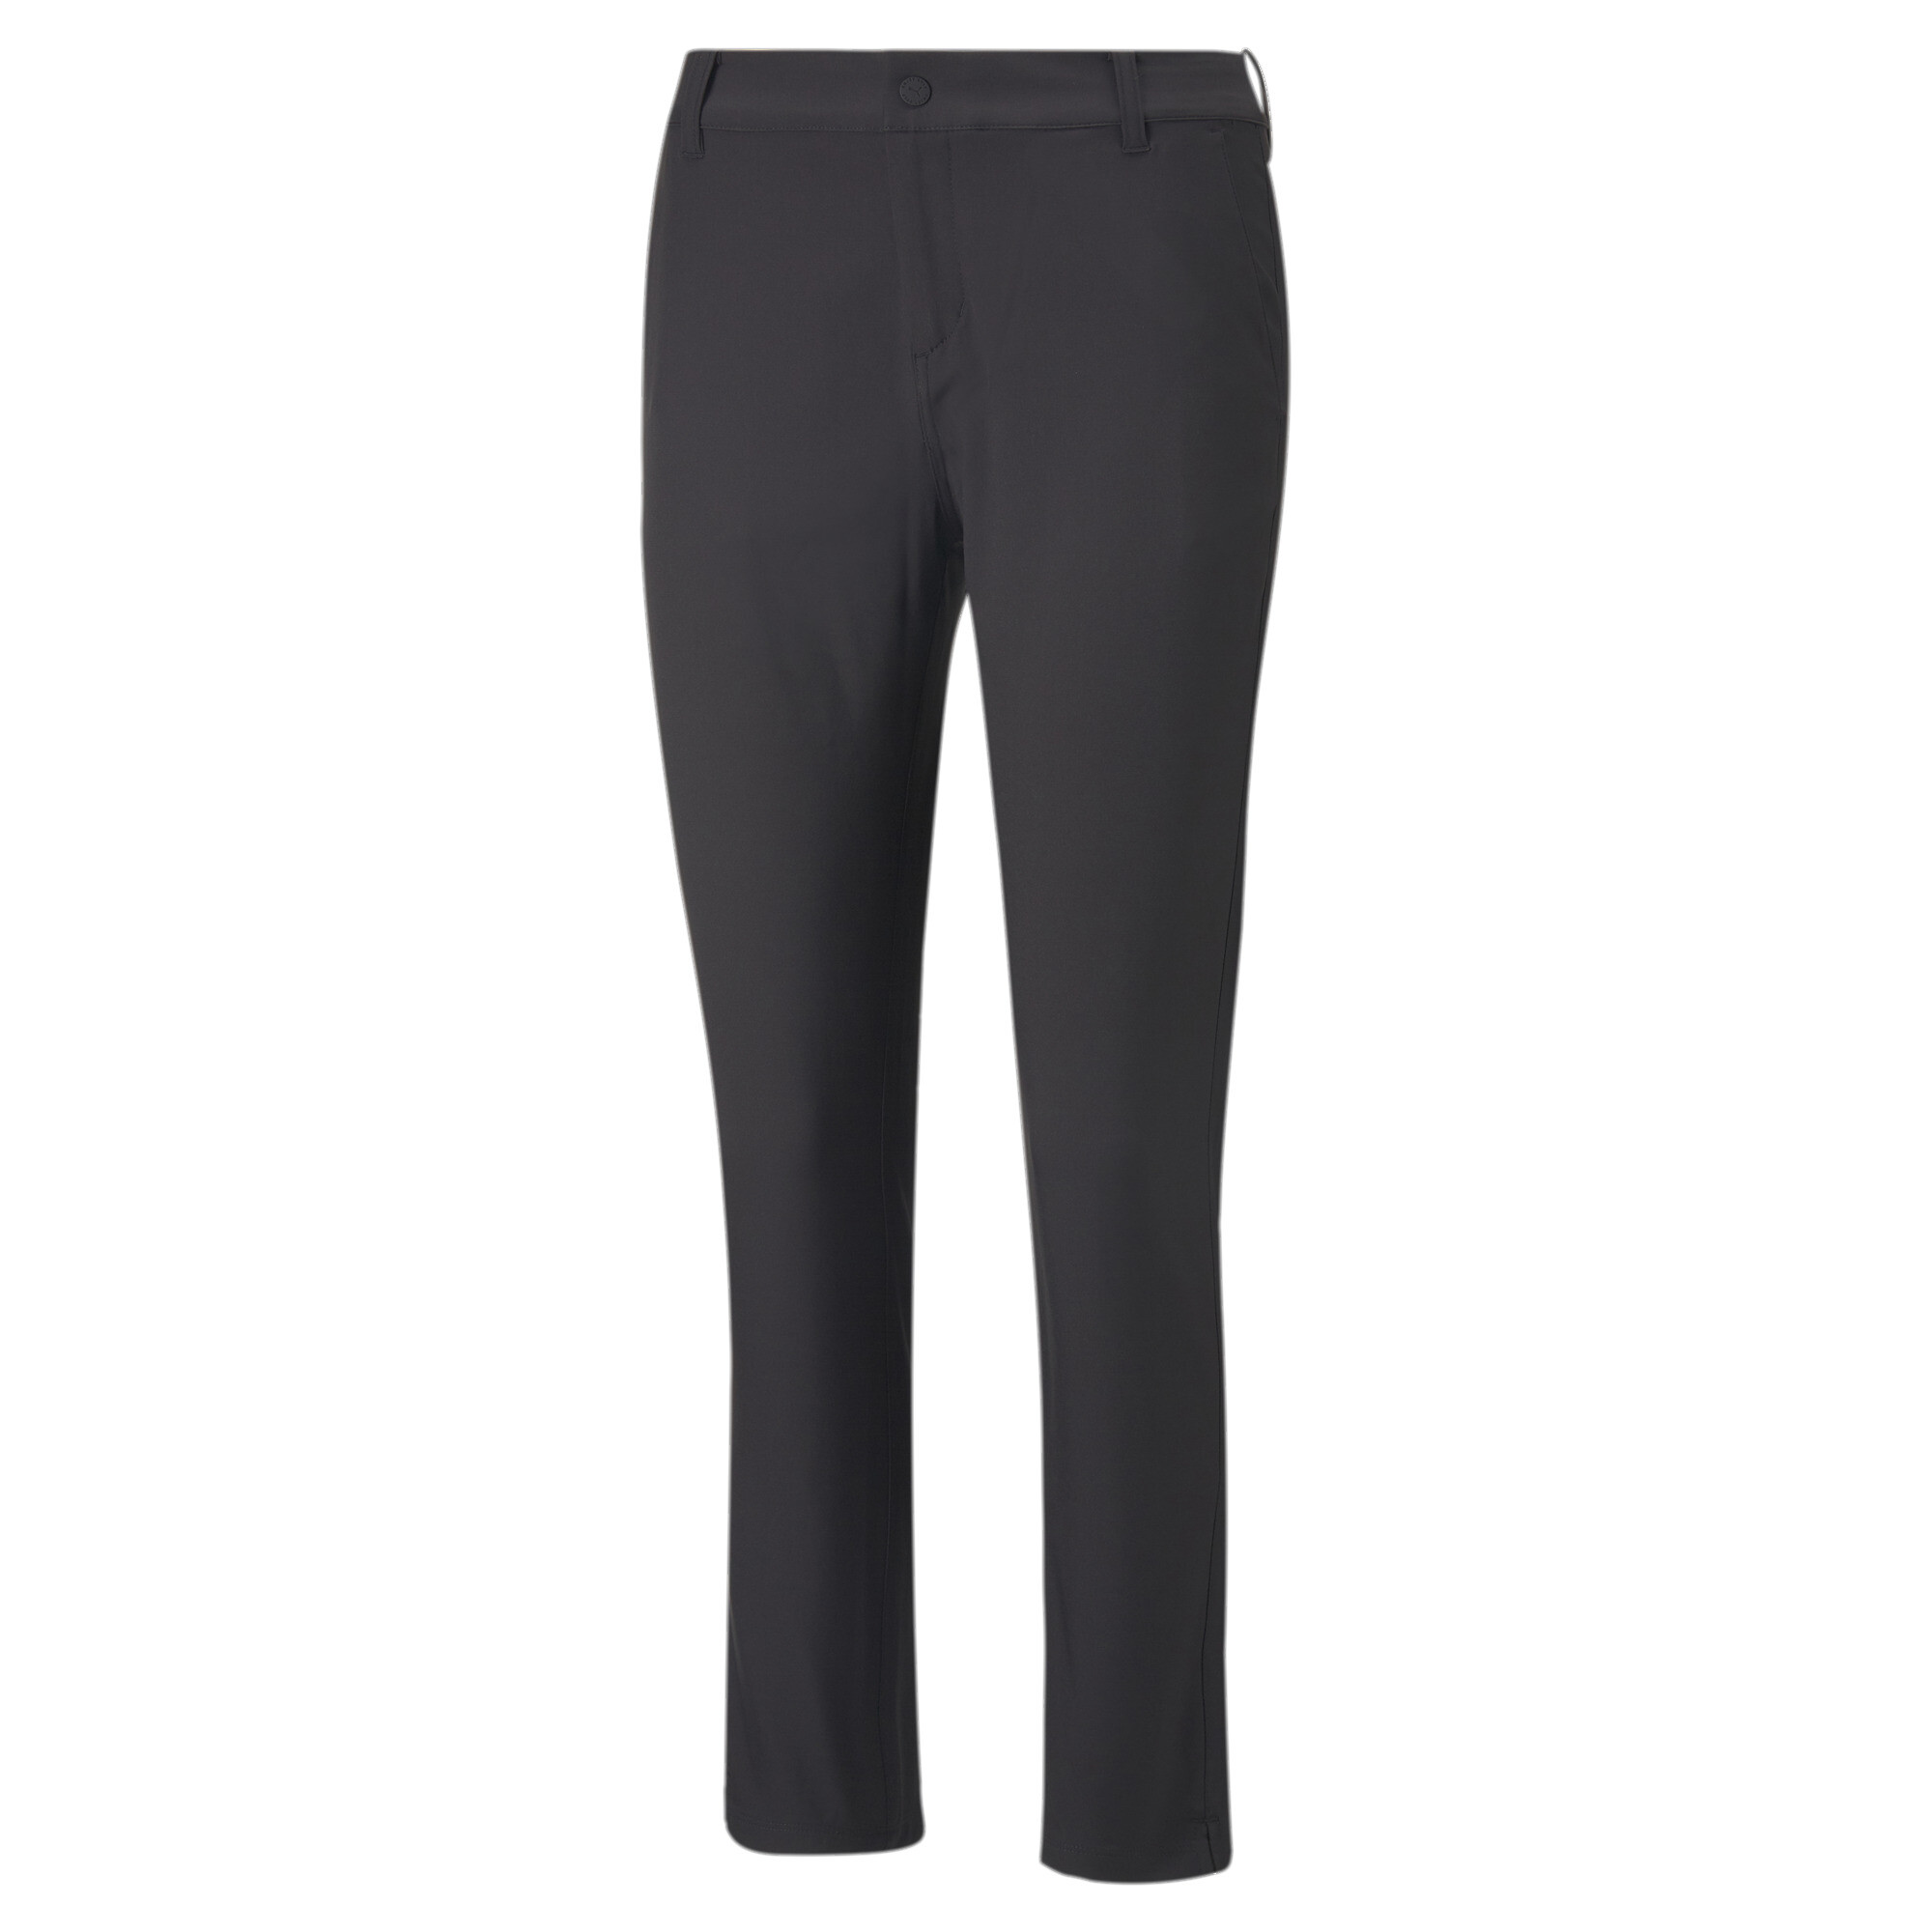 Women's Puma W Boardwalk Golf Pants, Black, Size M, Clothing